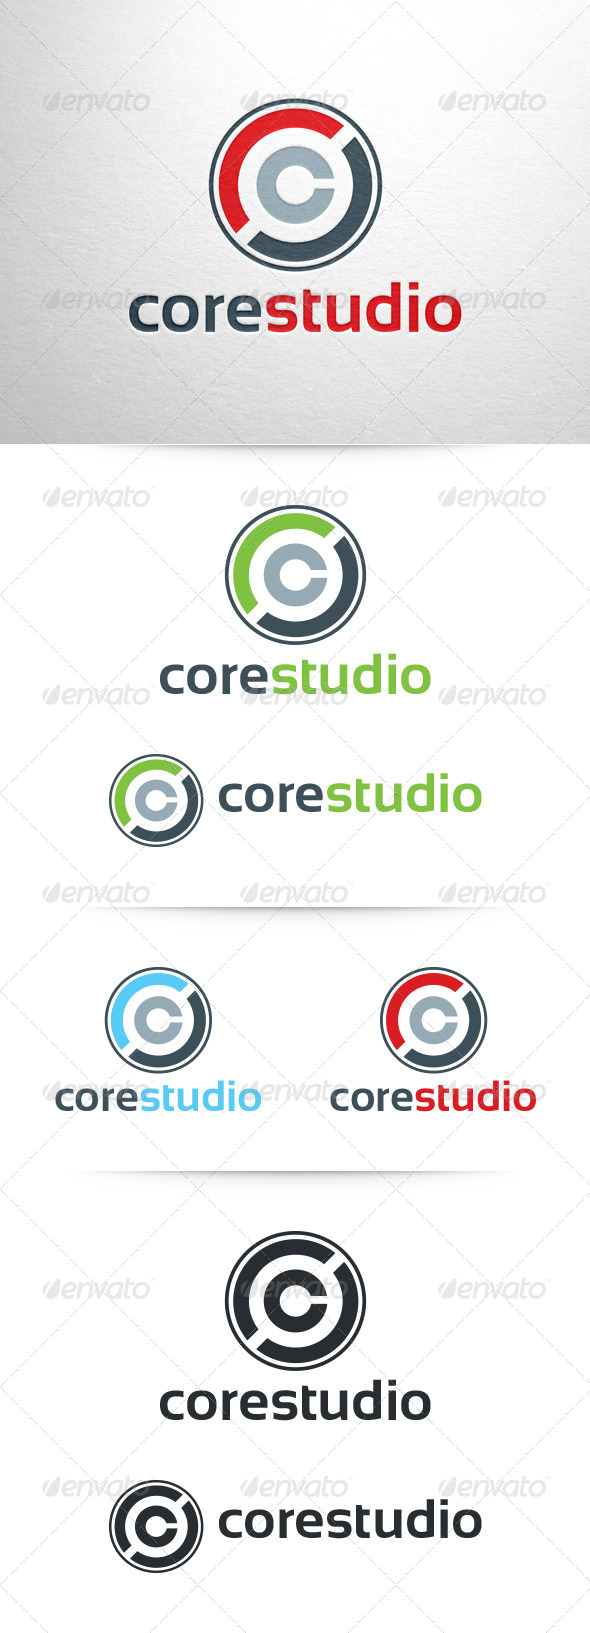 C Three Letter Logo Template photo - 1